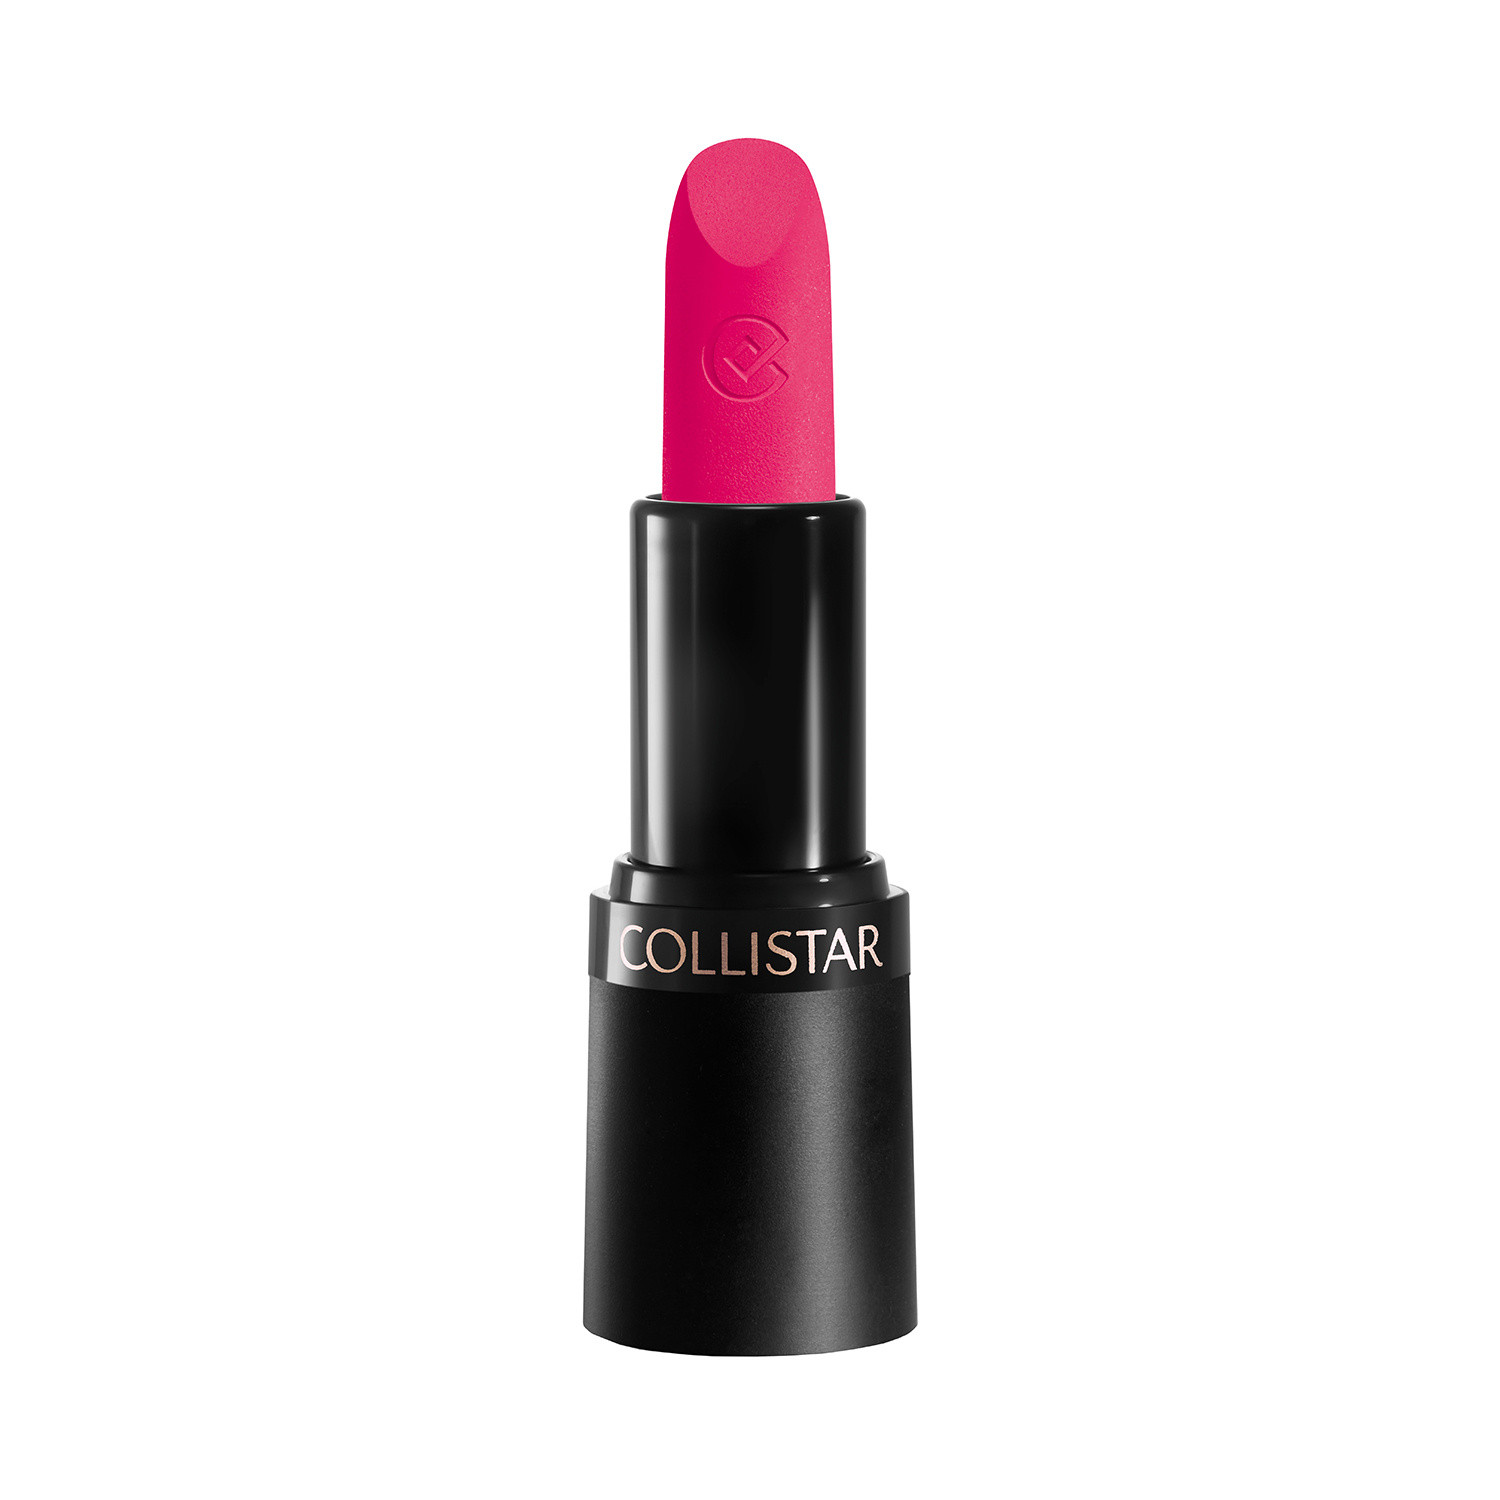 Collistar - Pure matte lipstick - 103 Fuchsia Petunia, Pink Fuchsia, large image number 0